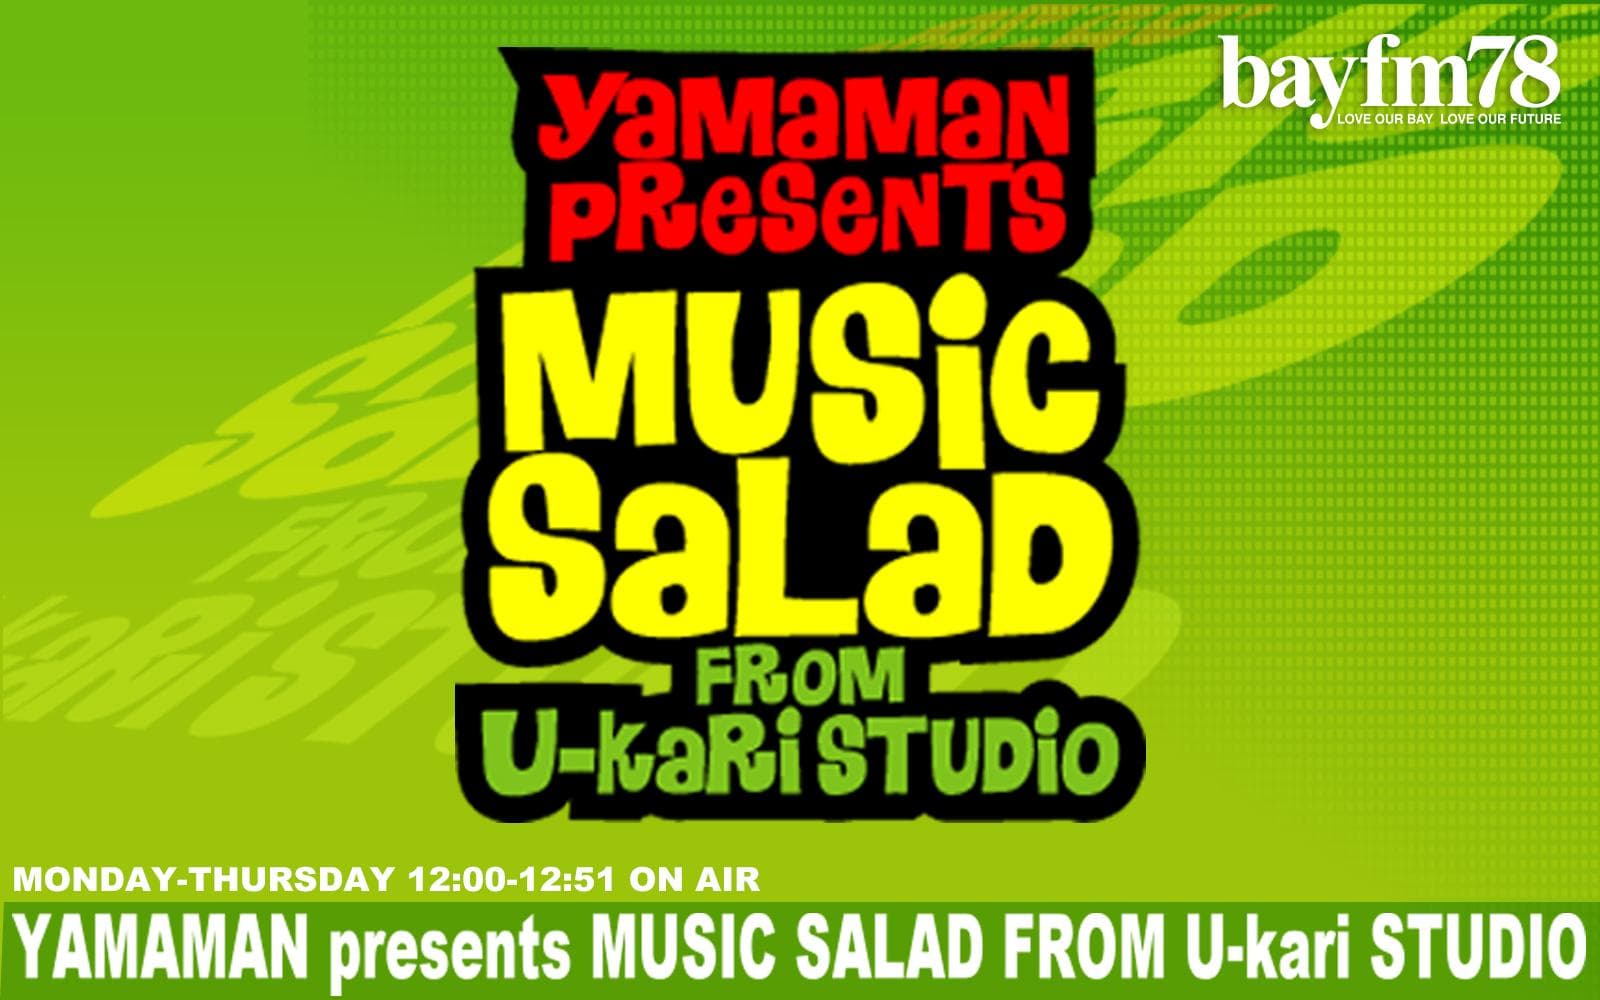 YAMAMAN presents MUSIC SALAD from U-kari Studioのヘッダー画像